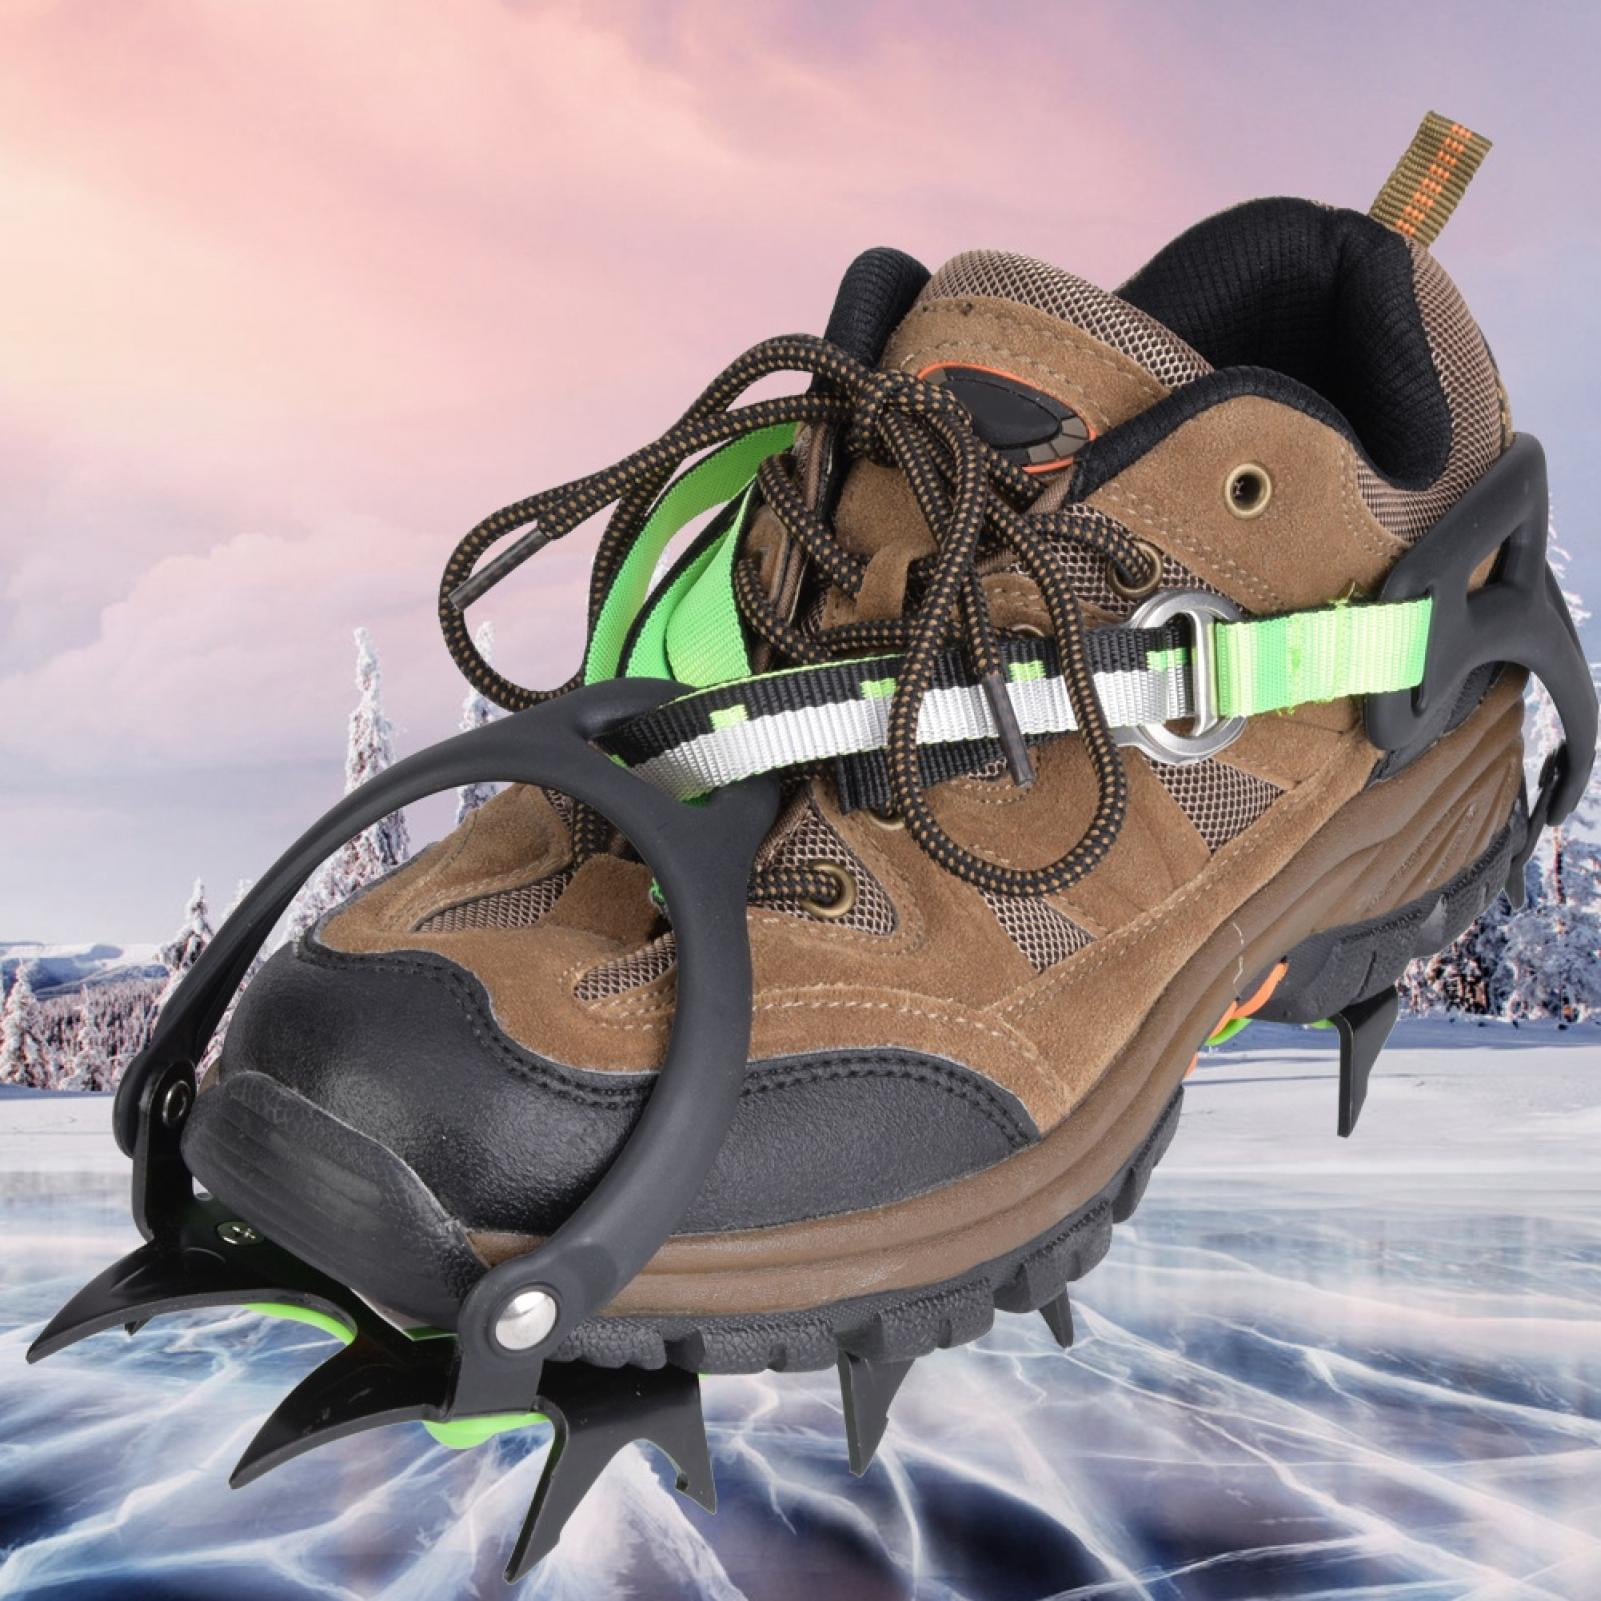 Stickfrease Ice Gripper 14-Teeth Winter Sports Anti-Slip Cleats Shoe Boot Grips Crampon Chain Spike Snow Climbing Equipment 2pcs Black 